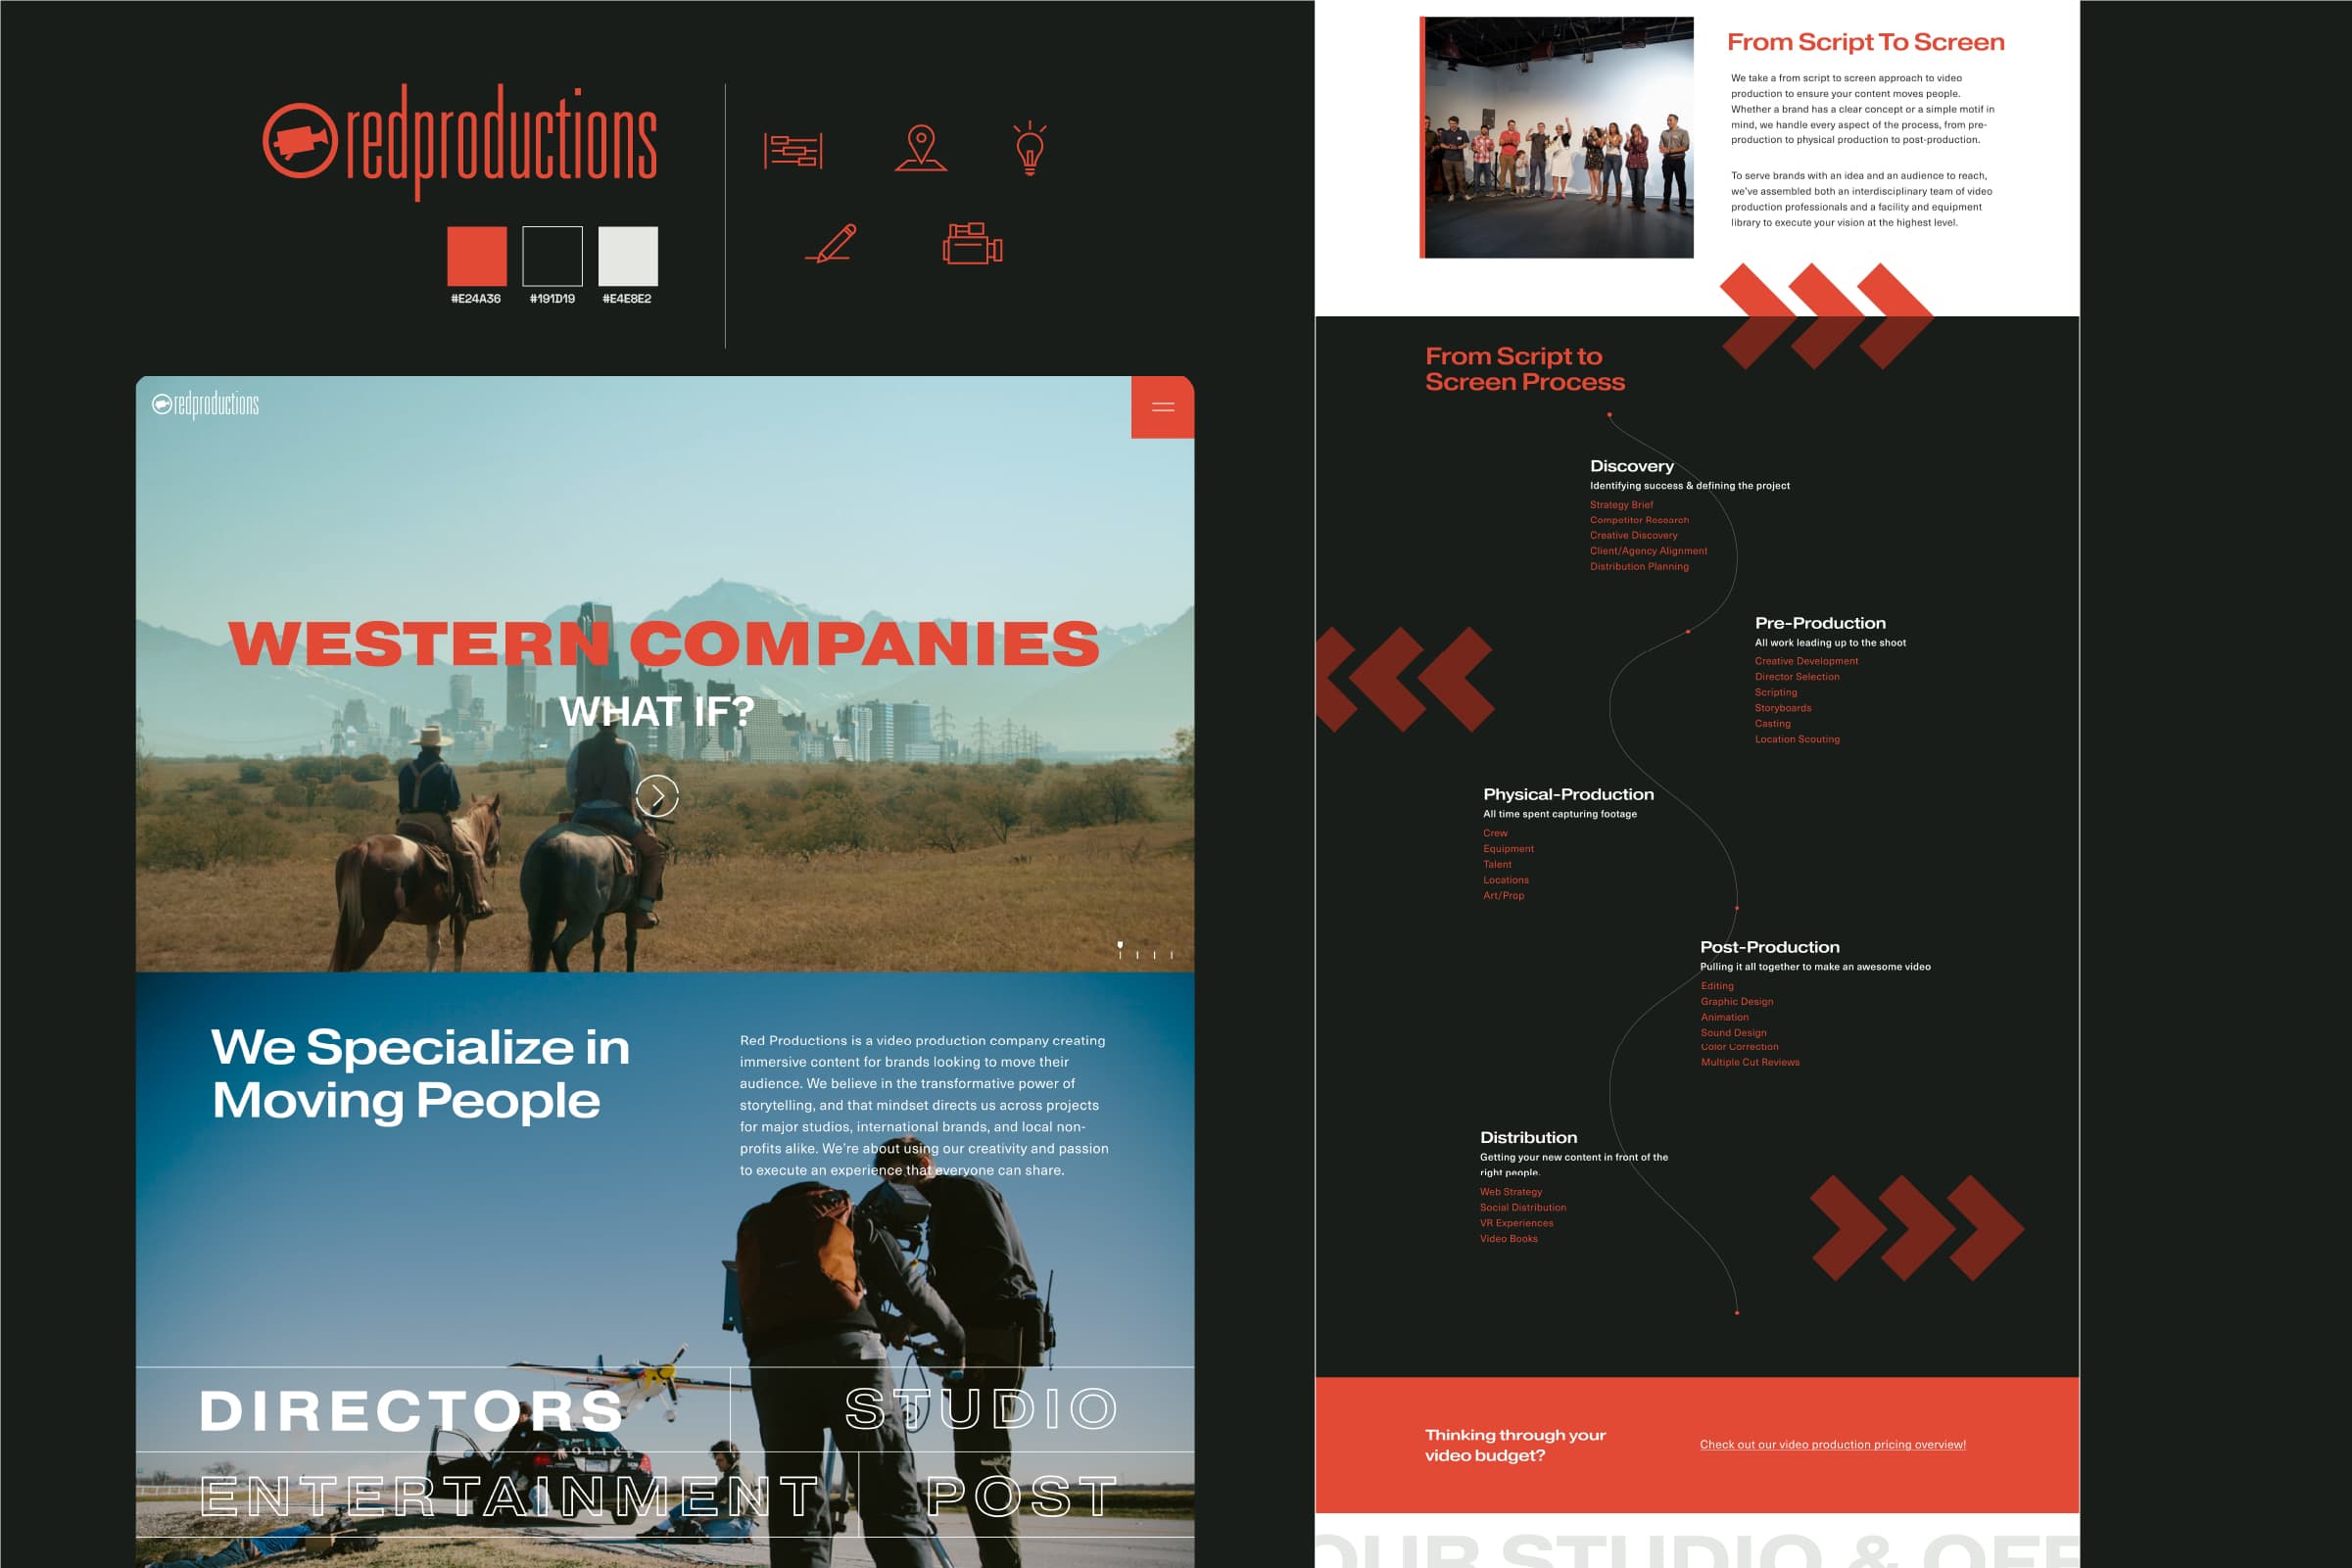 Red Productions website design screenshots